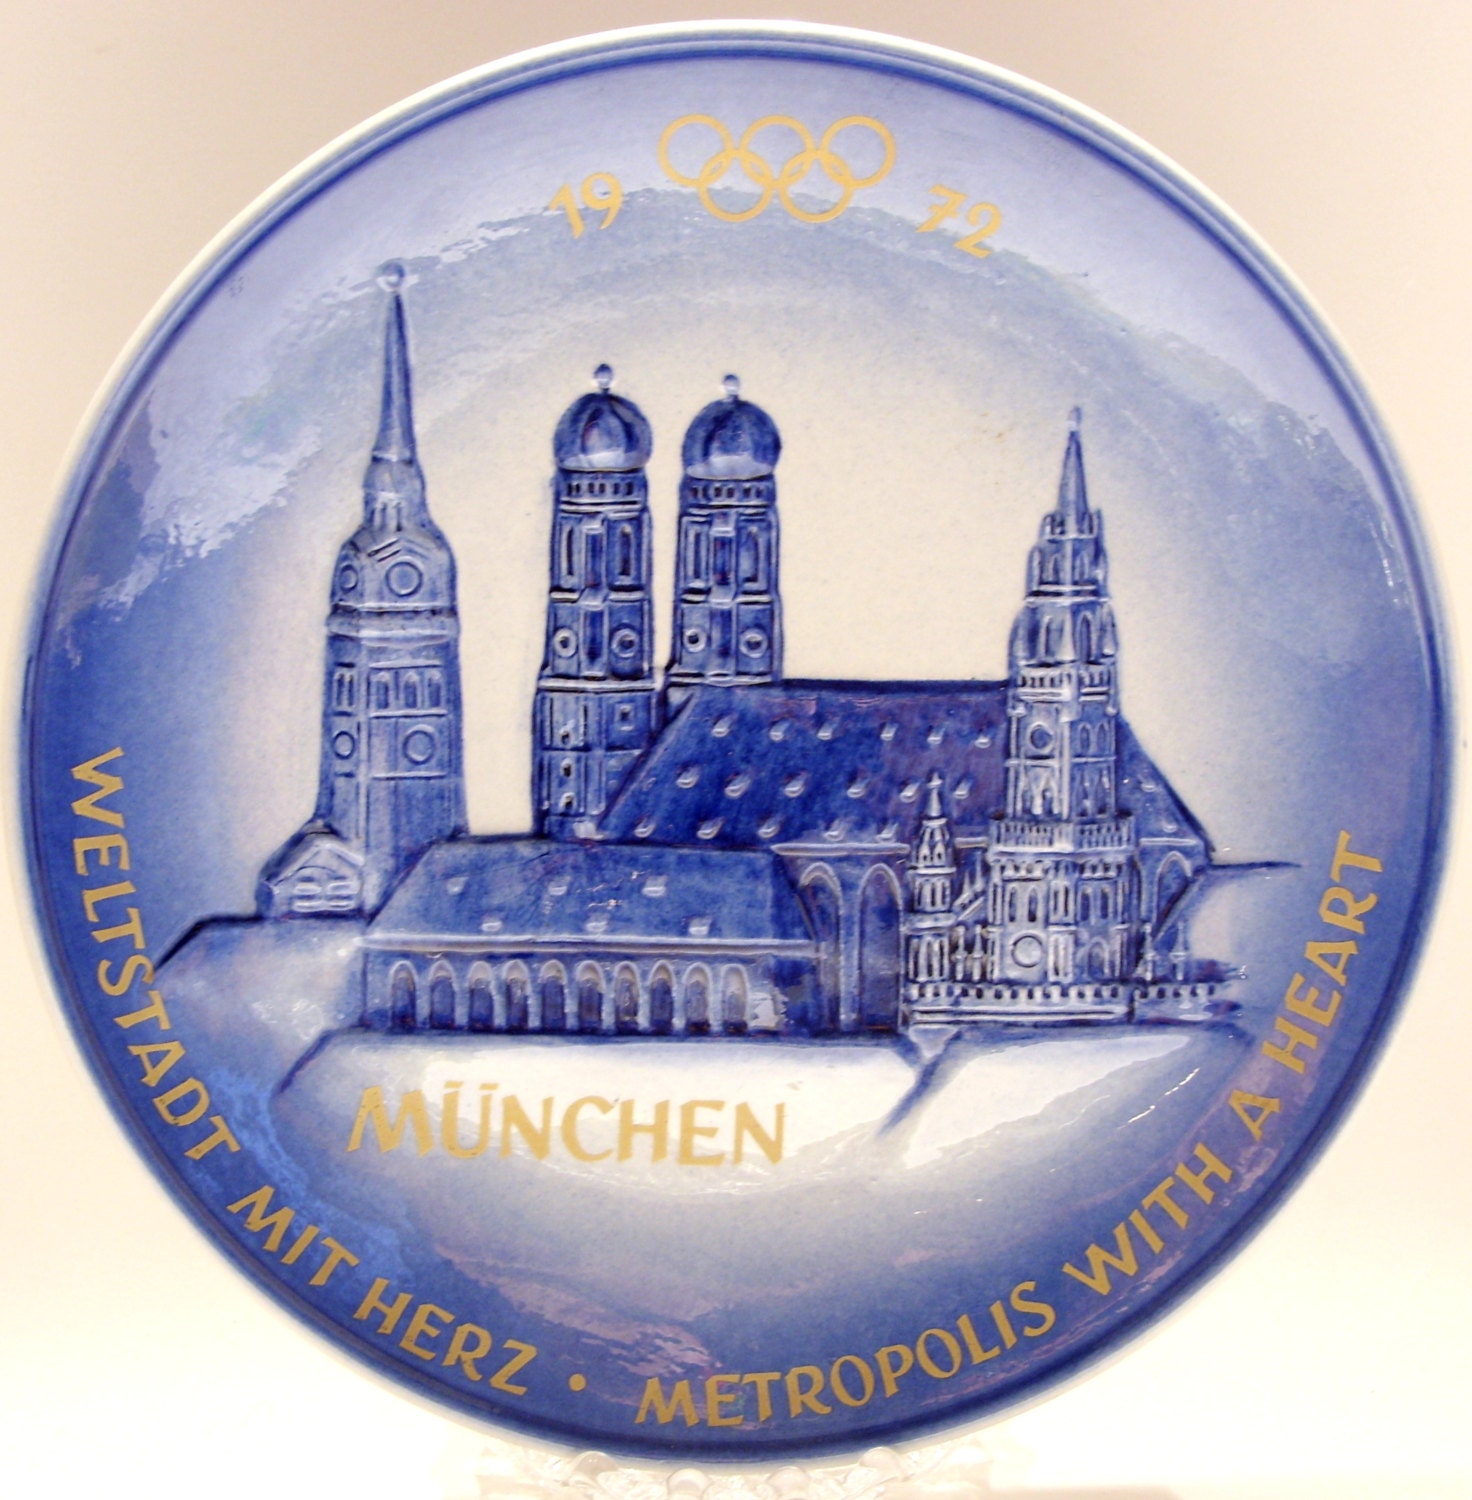 Goebel 1972 Munich Olympics Plate - HometownVintage